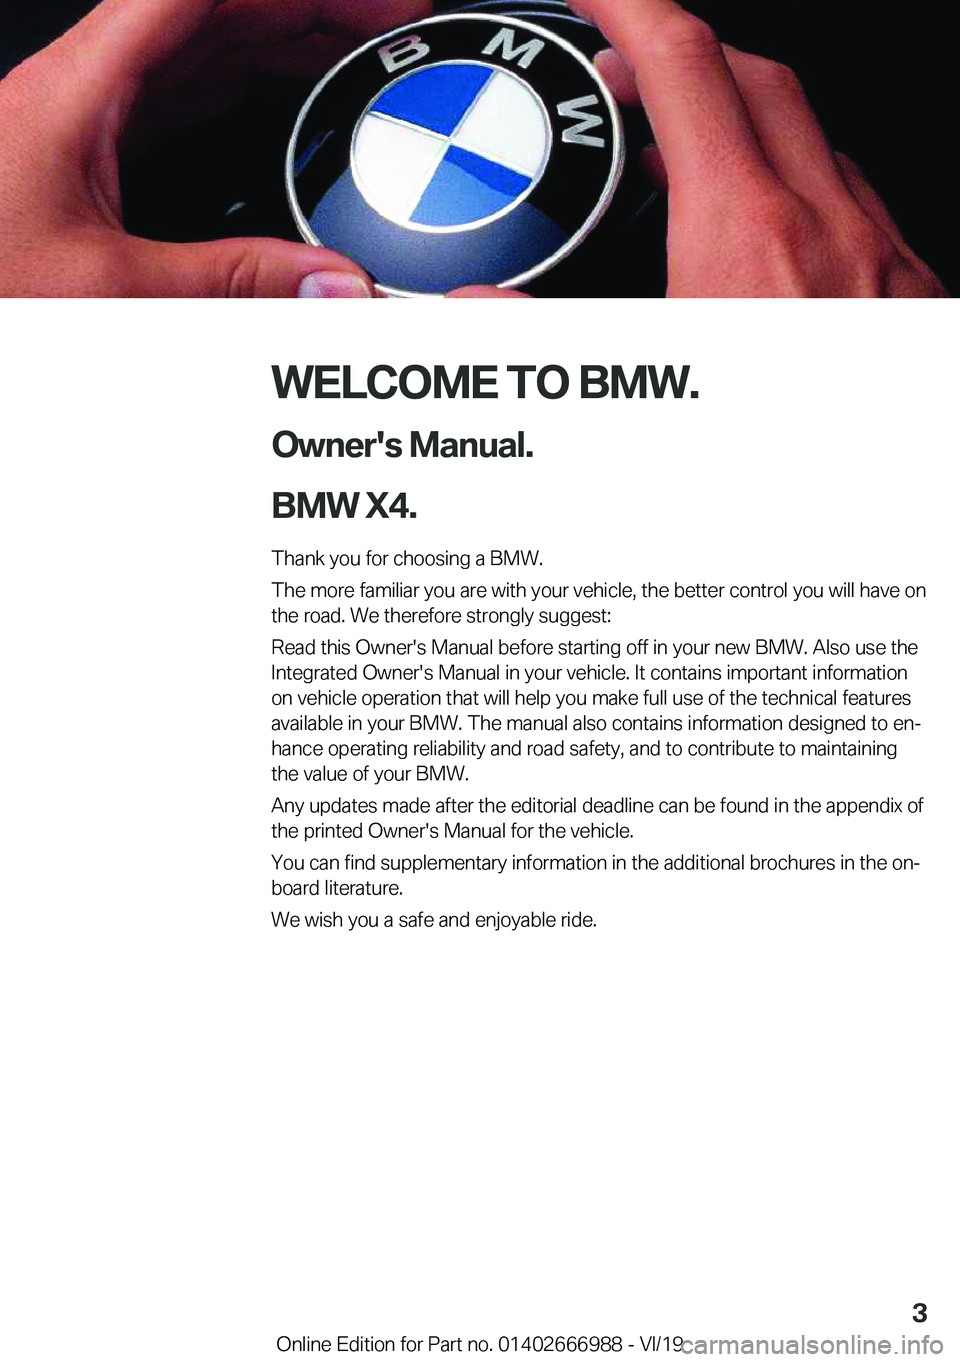 BMW X4 2020  Owners Manual �W�E�L�C�O�M�E��T�O��B�M�W�.�O�w�n�e�r�'�s��M�a�n�u�a�l�.
�B�M�W��X�4�.
�T�h�a�n�k��y�o�u��f�o�r��c�h�o�o�s�i�n�g��a��B�M�W�.
�T�h�e��m�o�r�e��f�a�m�i�l�i�a�r��y�o�u��a�r�e��w�i�t�h�